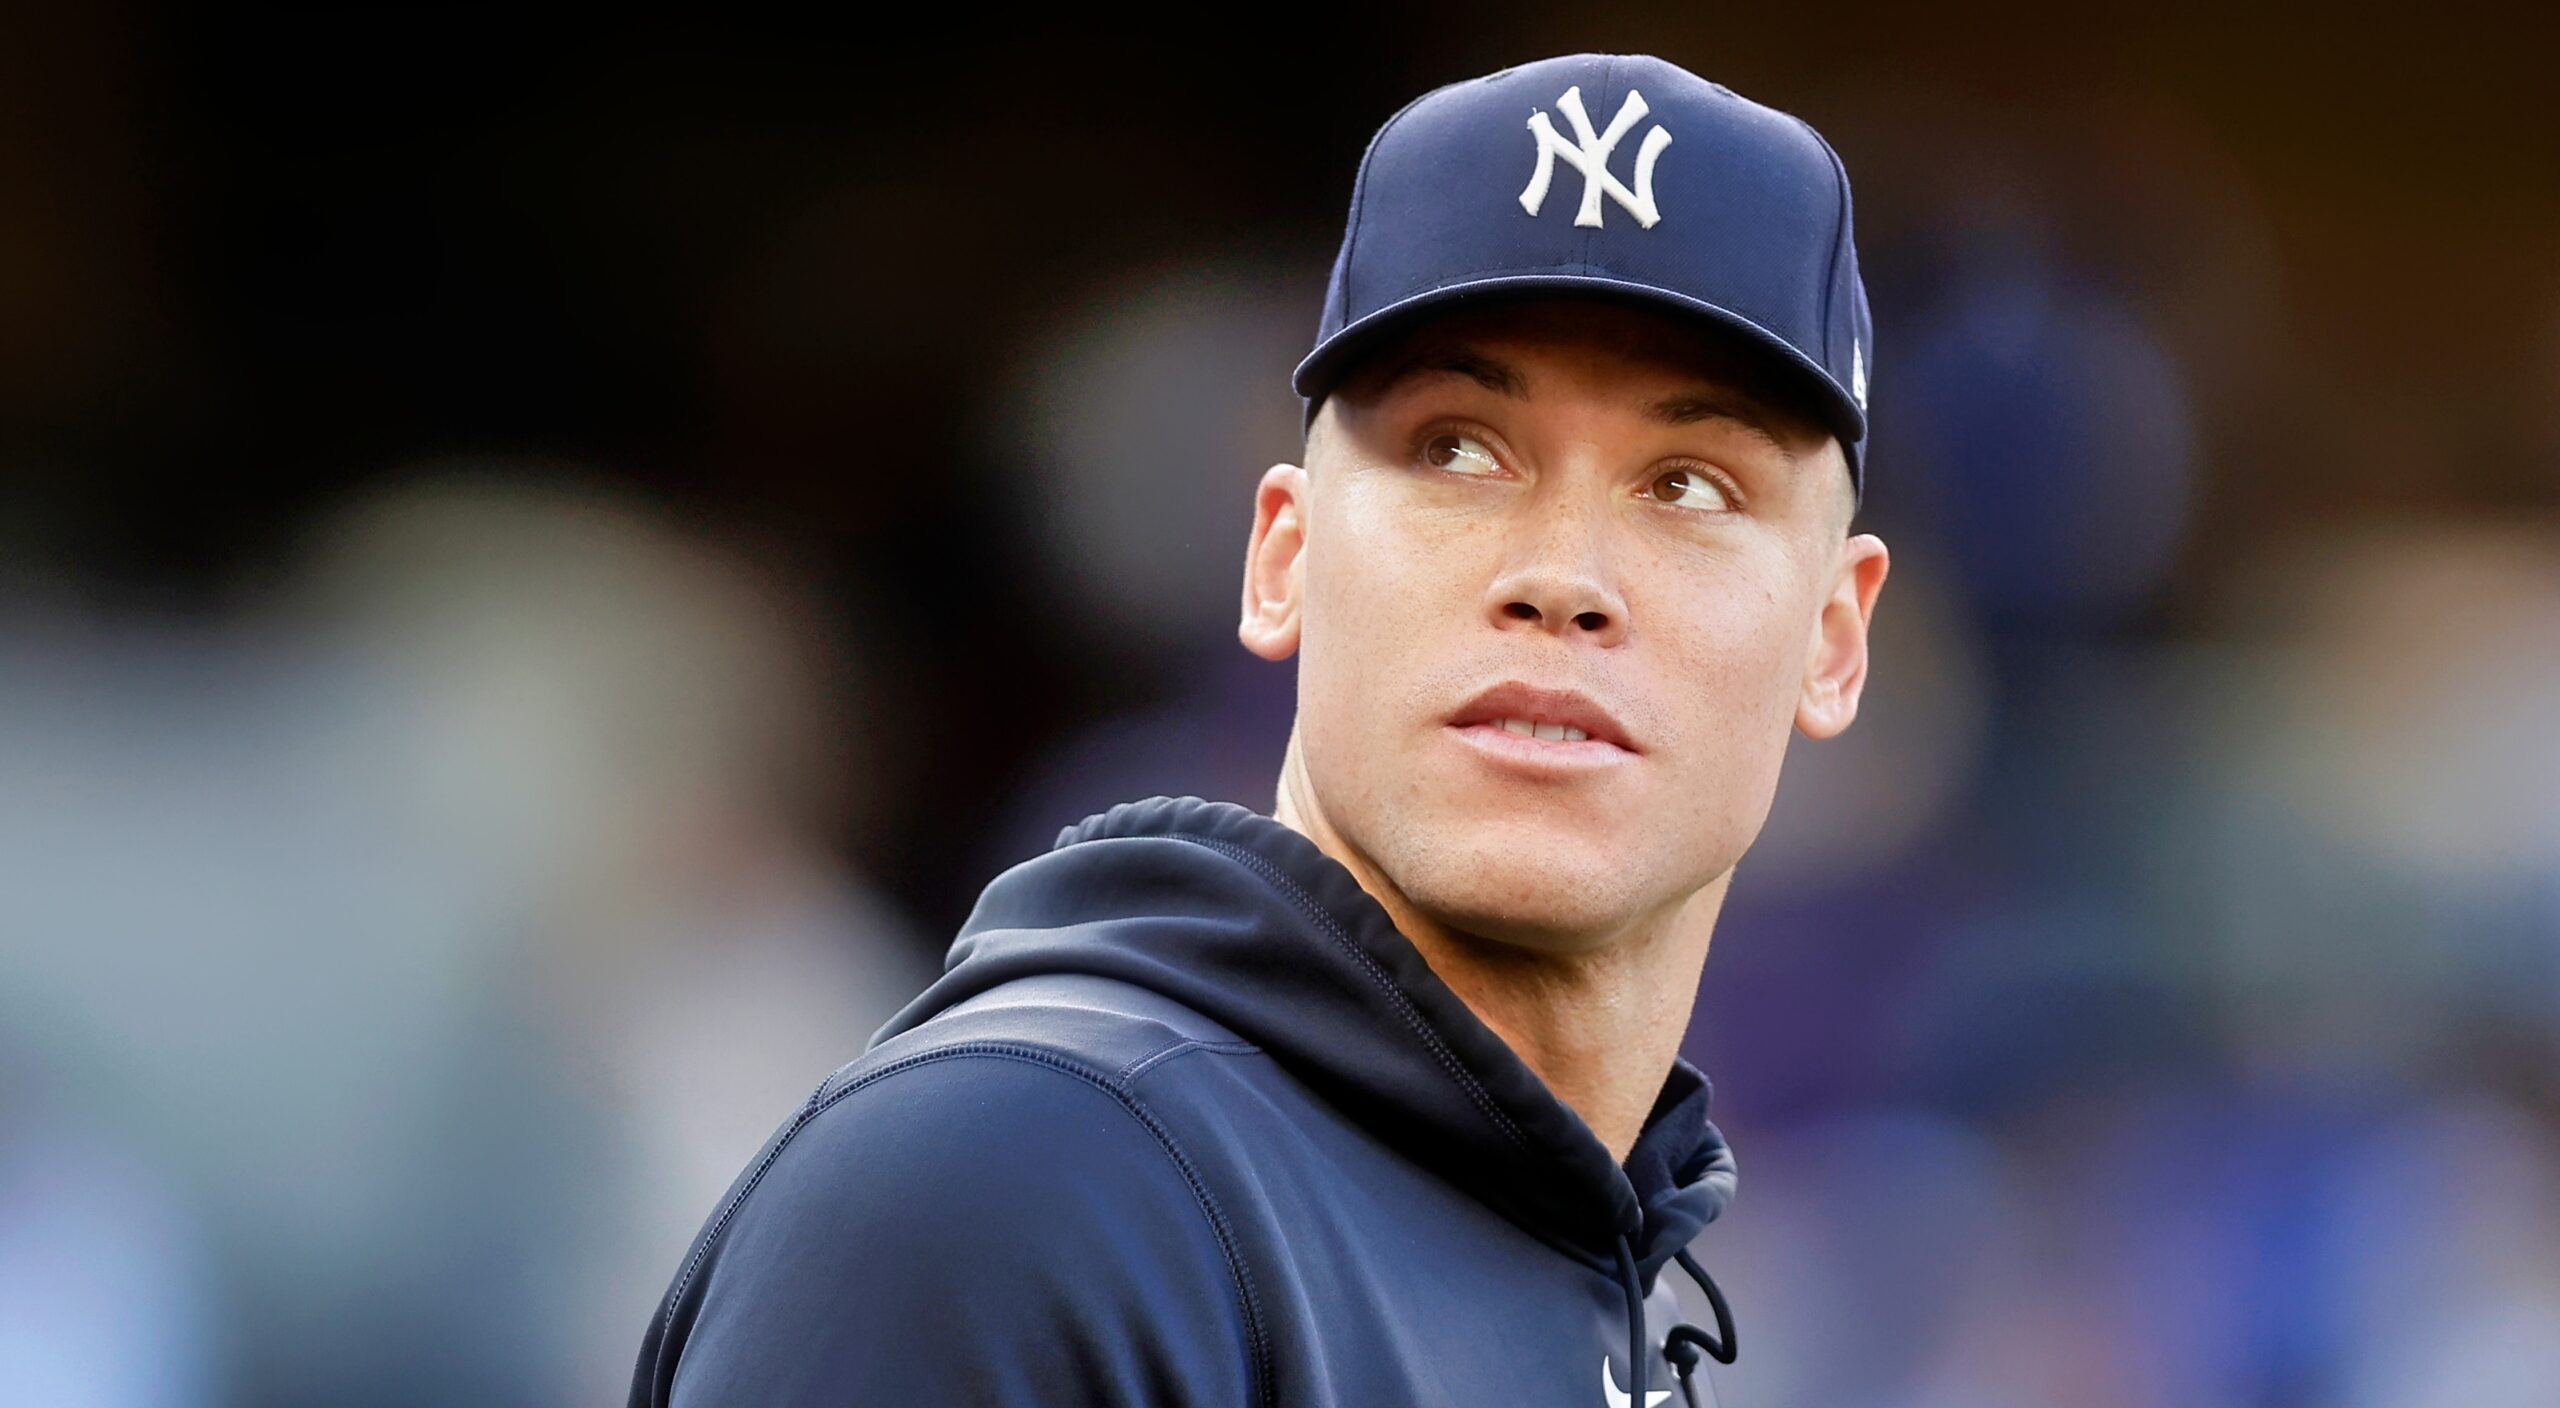 Yankees slugger Aaron Judge balks at idea of suing Dodgers over